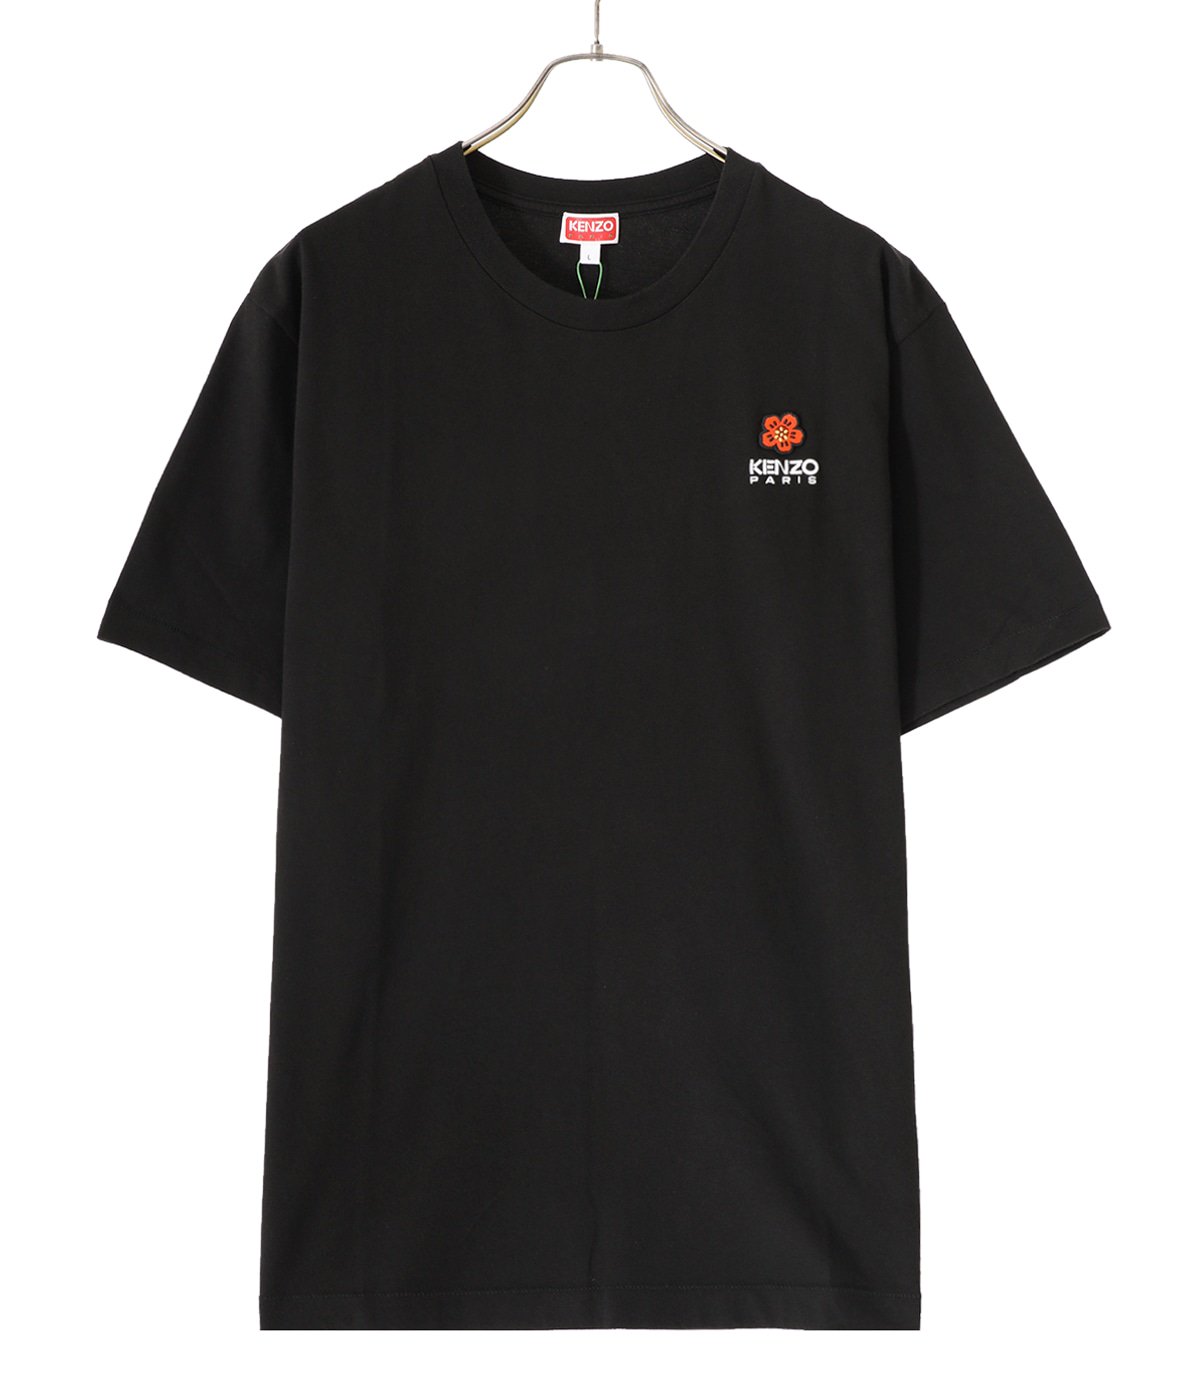 KENZO ケンゾー BOKE FLOWER Tシャツ BLACK | hartwellspremium.com